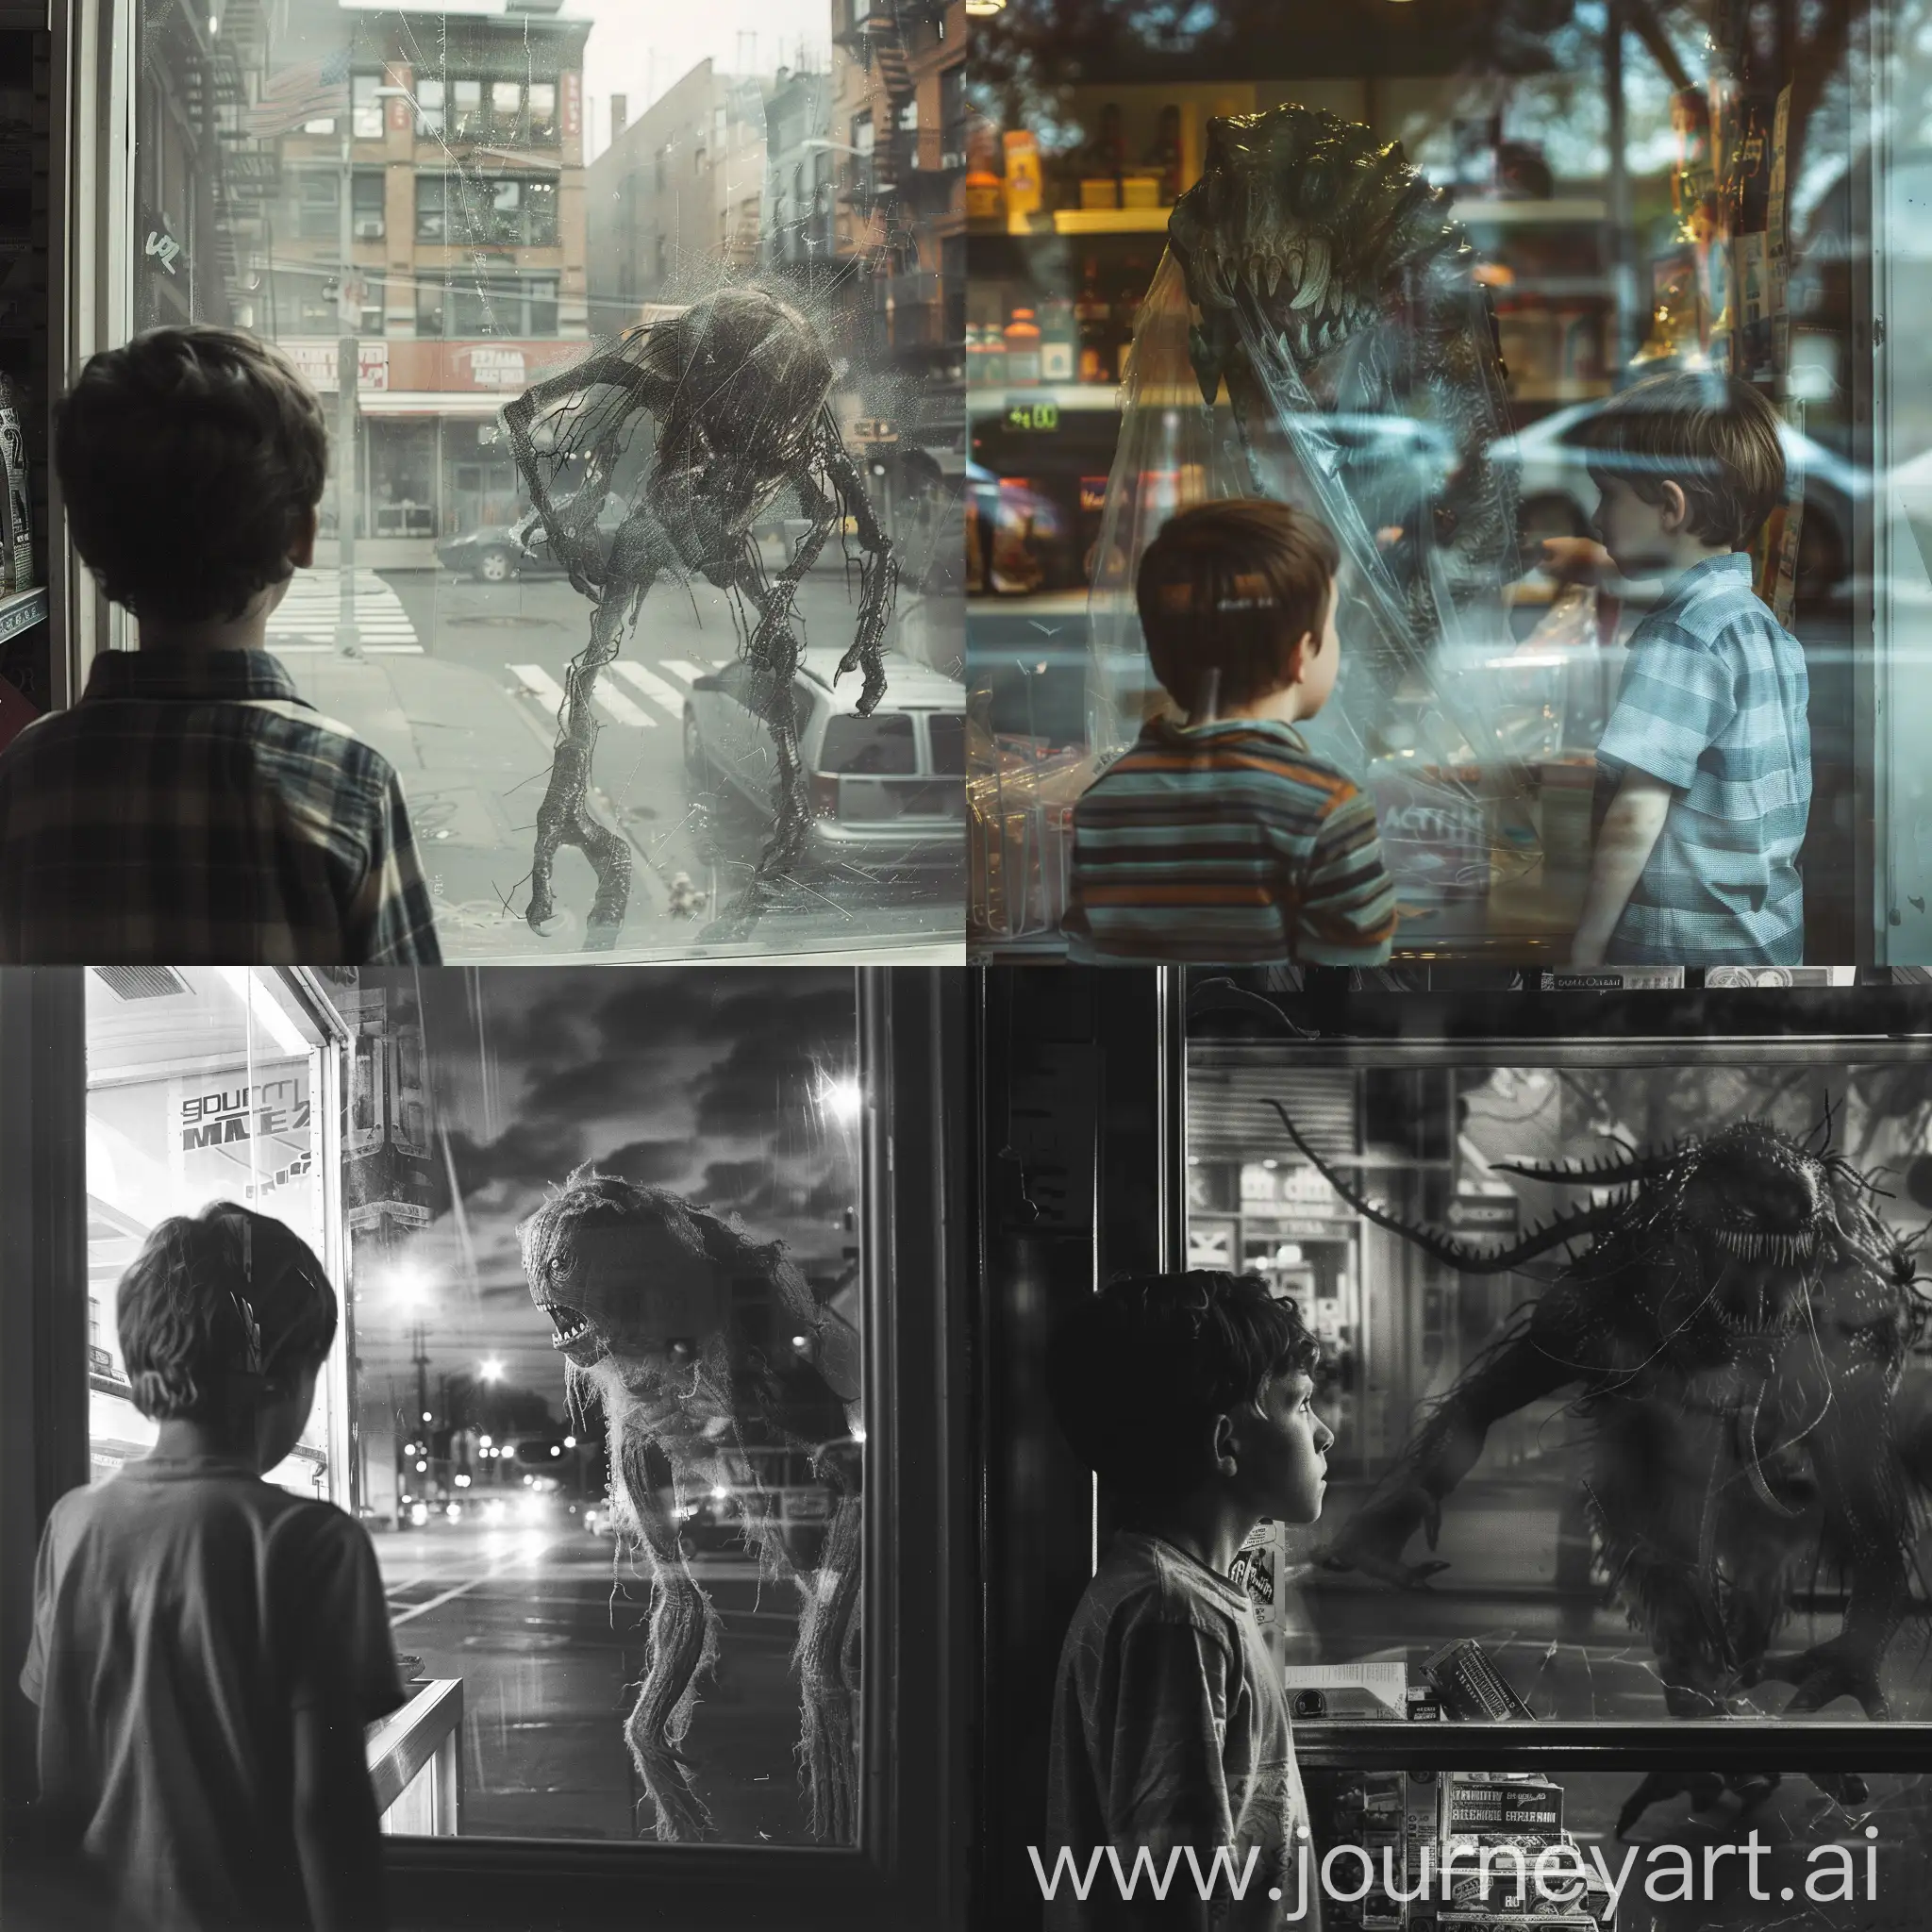 Curious-Boy-Observing-Street-Scene-through-Store-Window